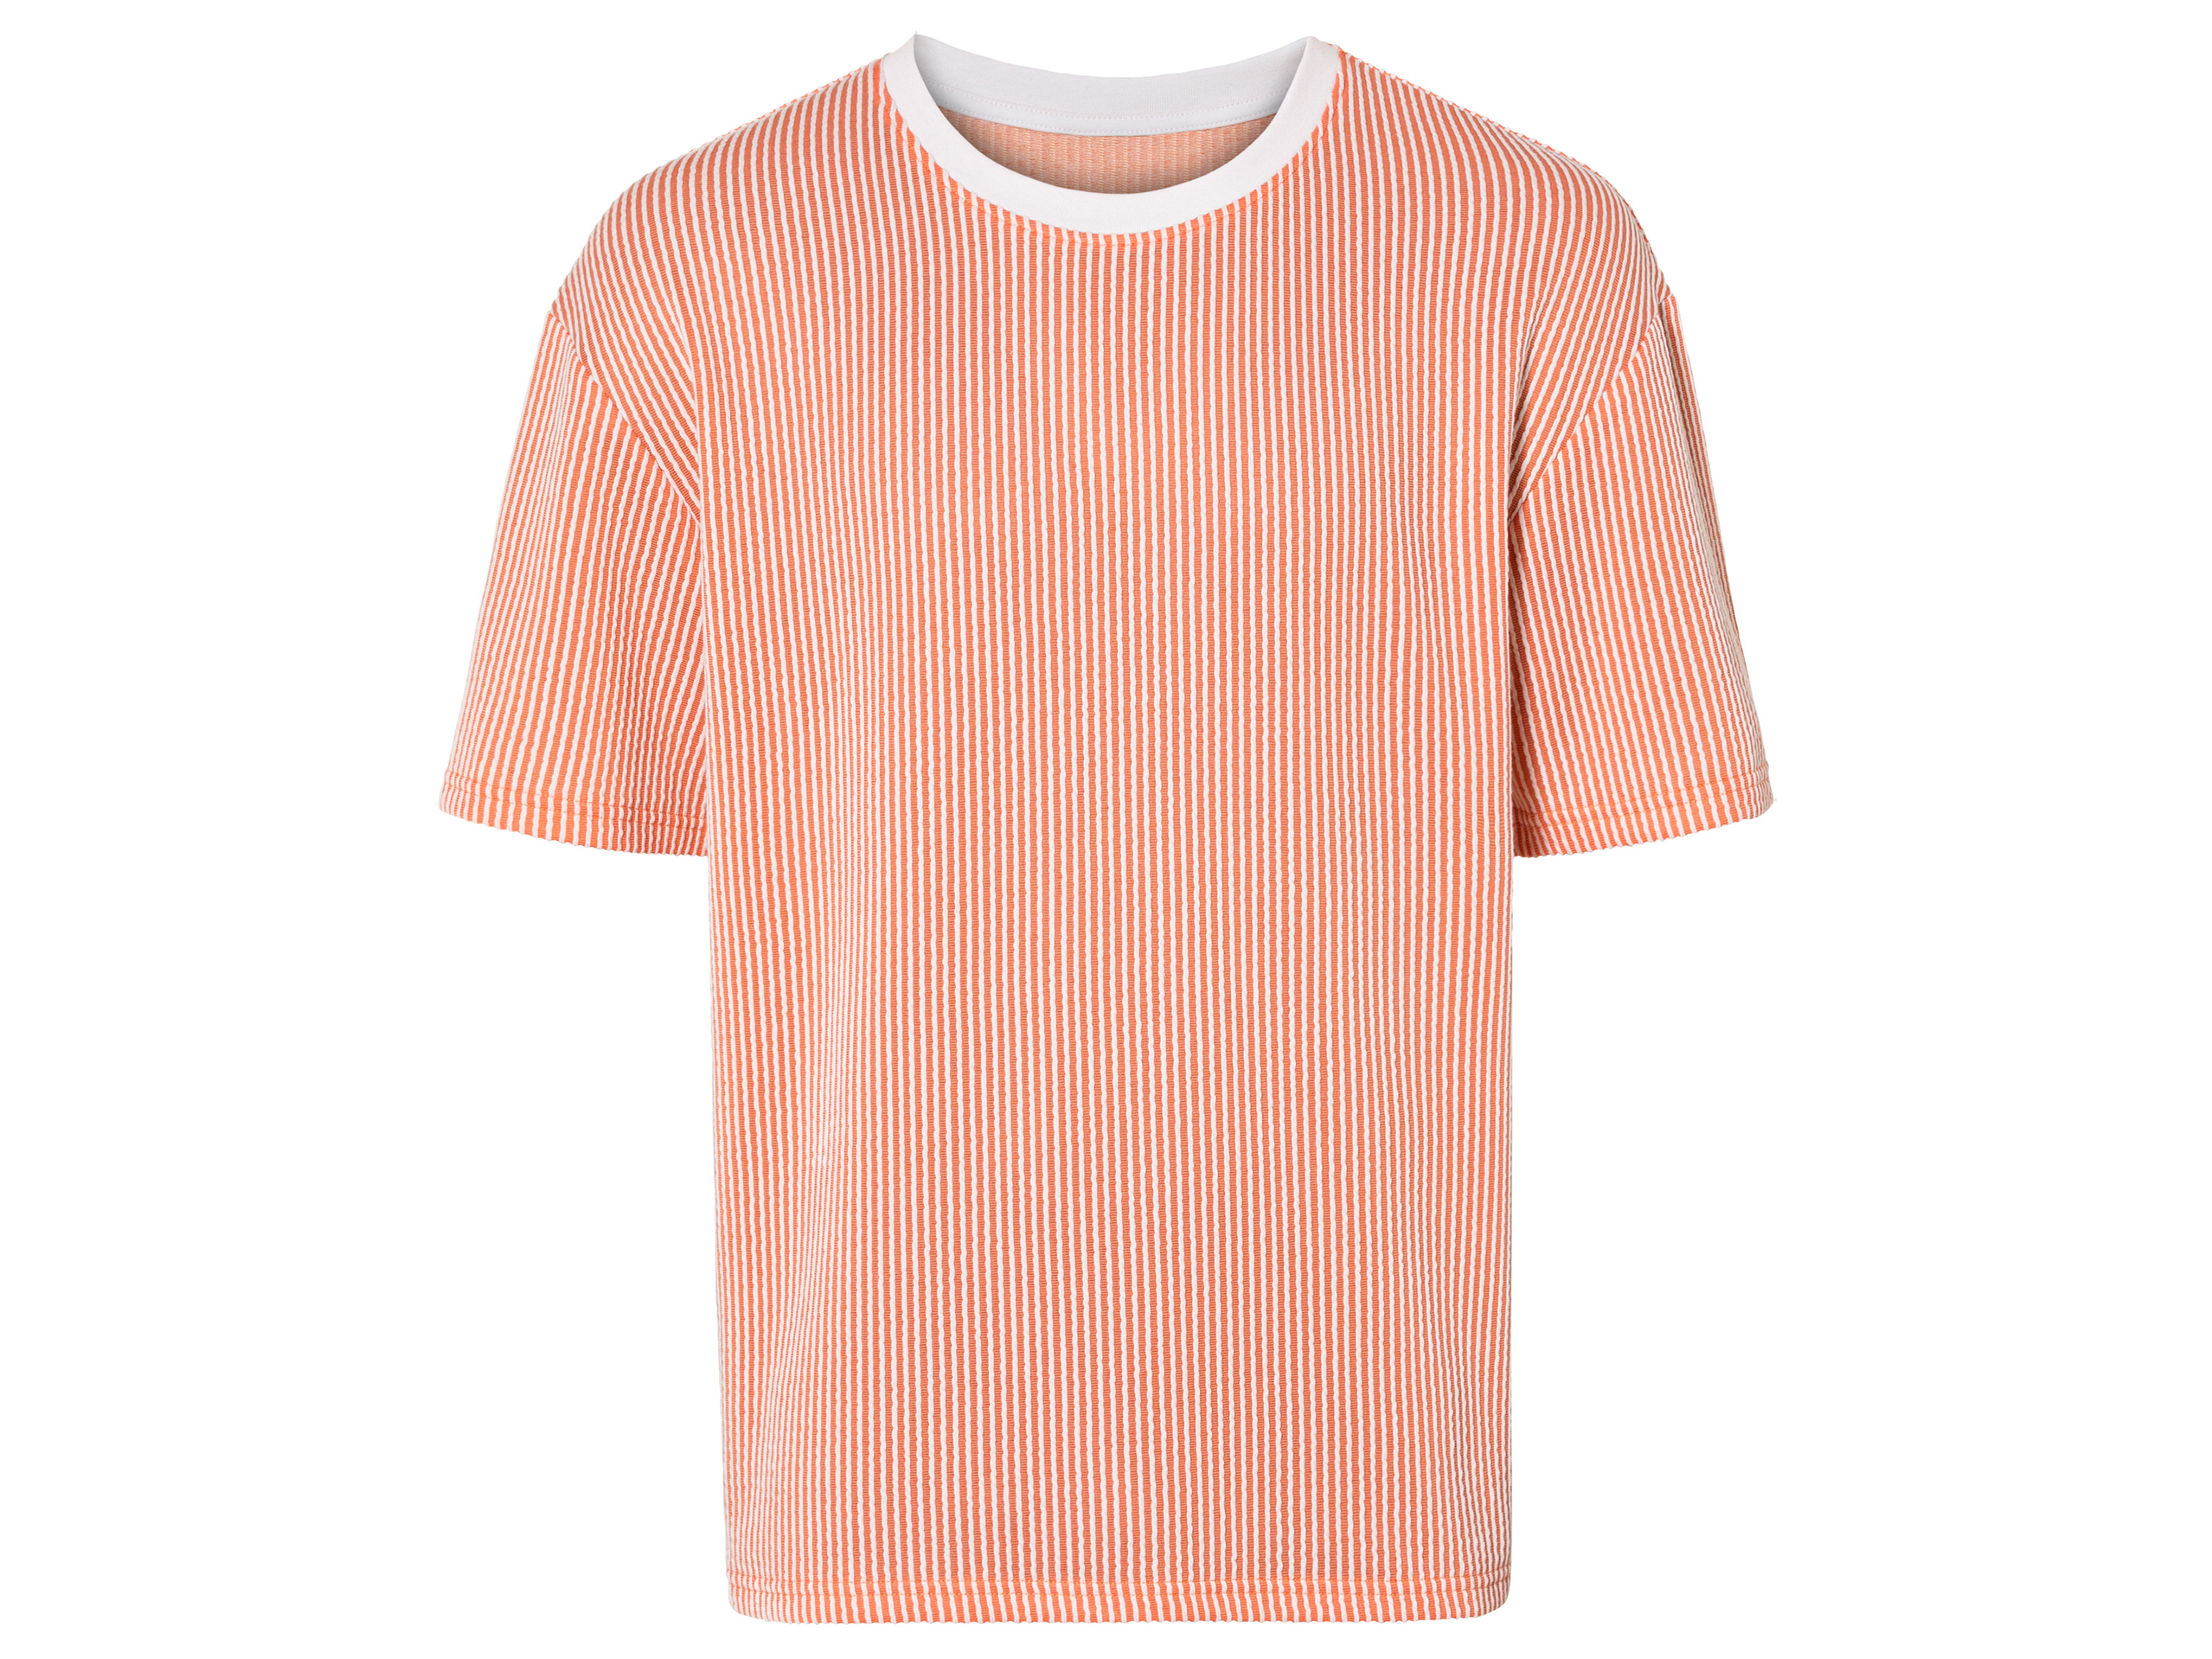 LIVERGY Heren T-shirt (L (52/54), Oranje/wit)